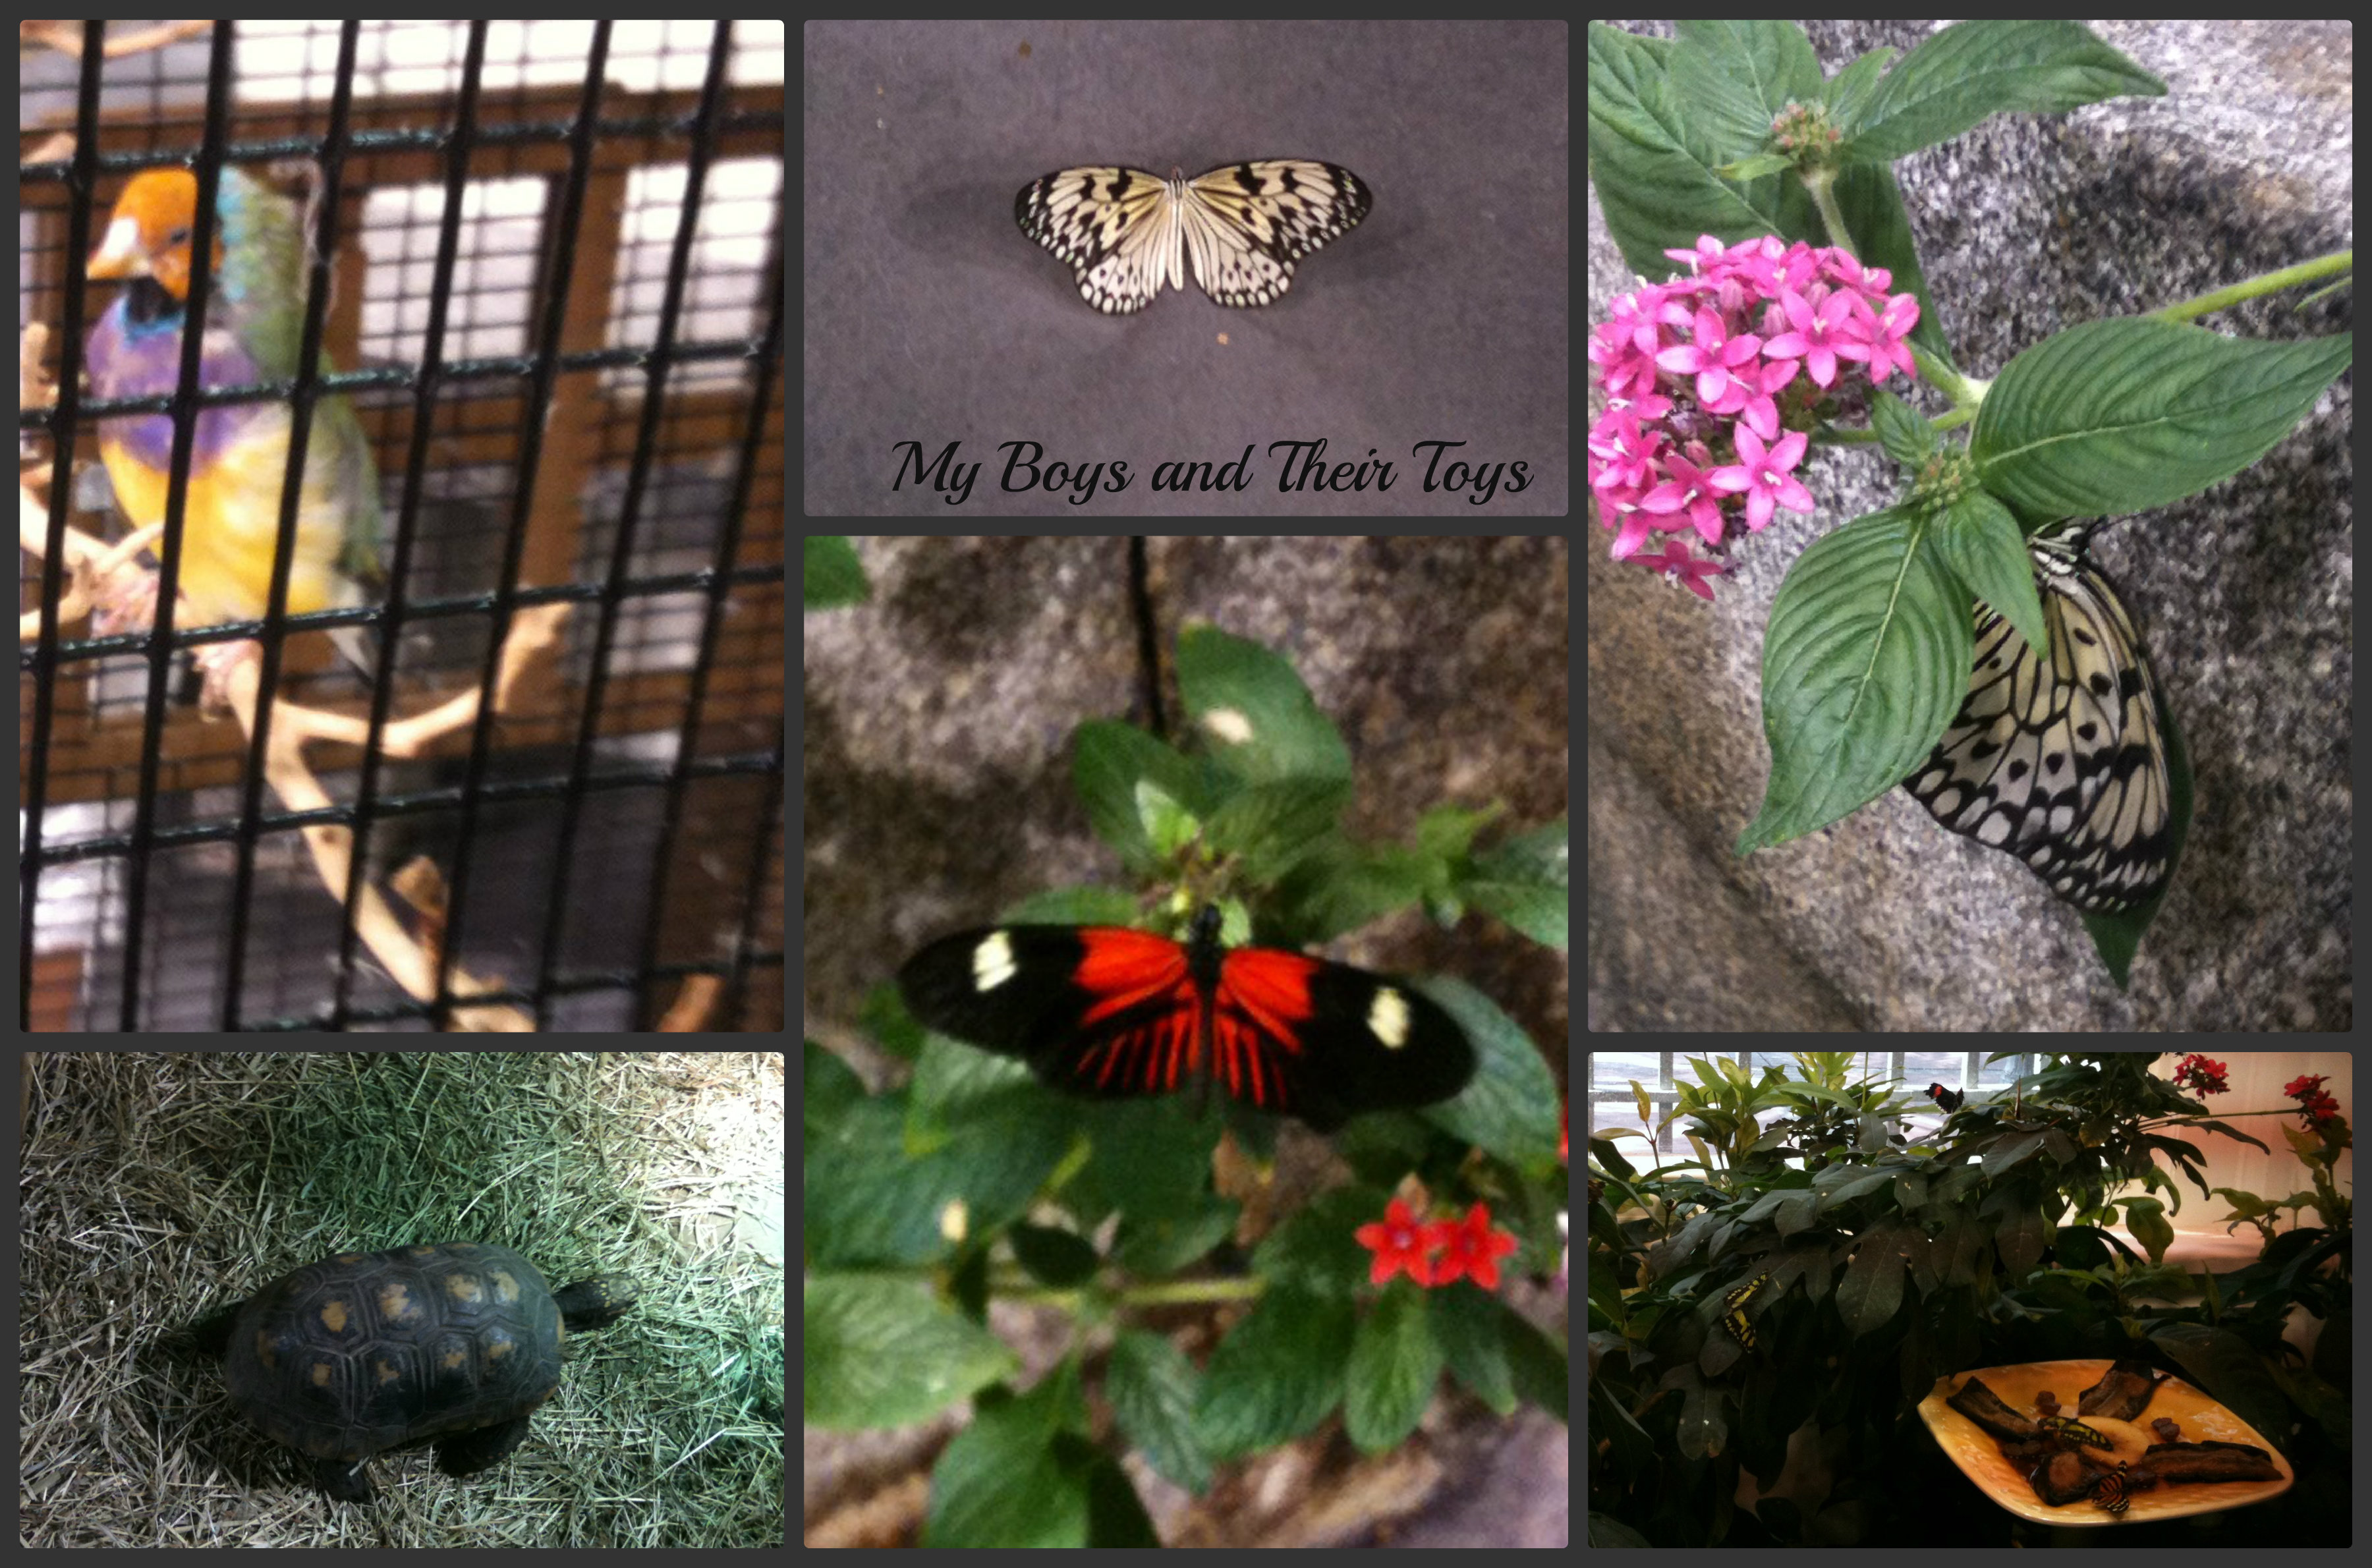 Nola S Audubon Butterfly Garden And Insectarium My Boys Their Toys